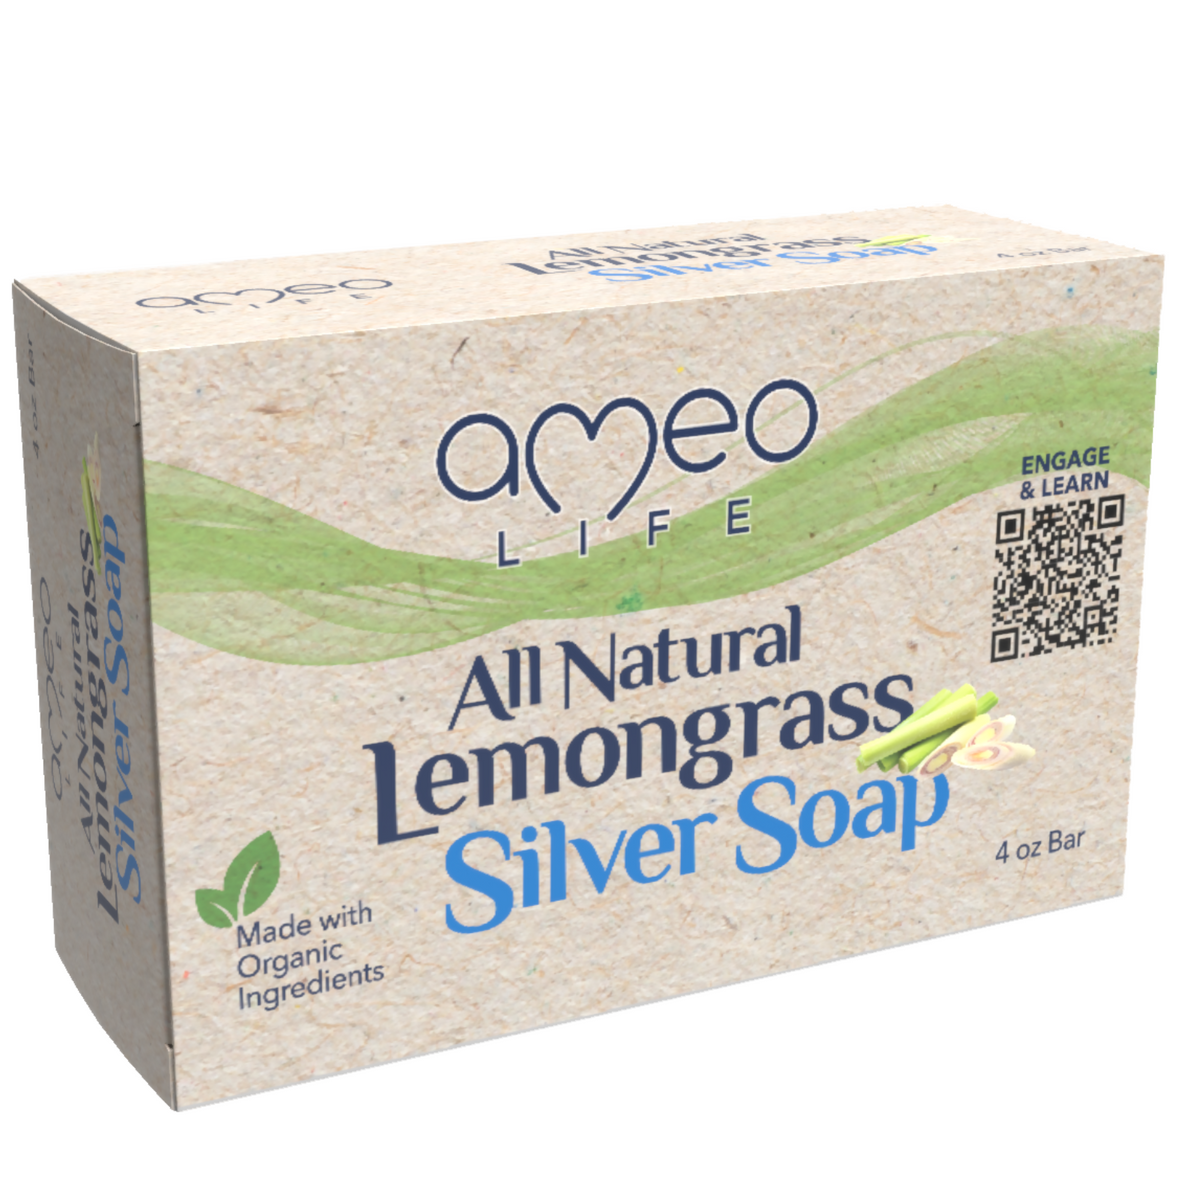 All Natural Lemongrass Silver Soap